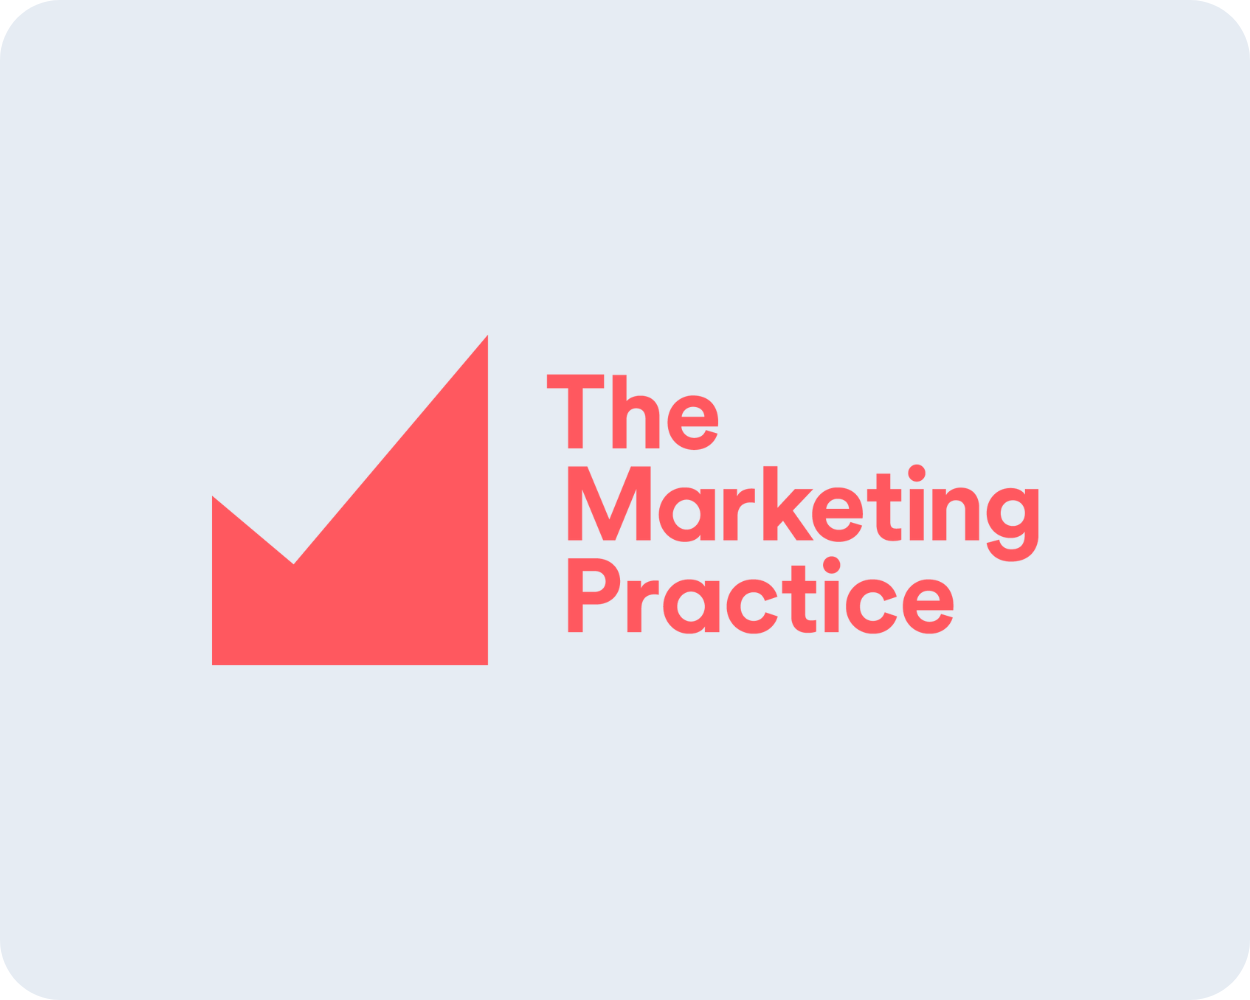 The Marketing Practice